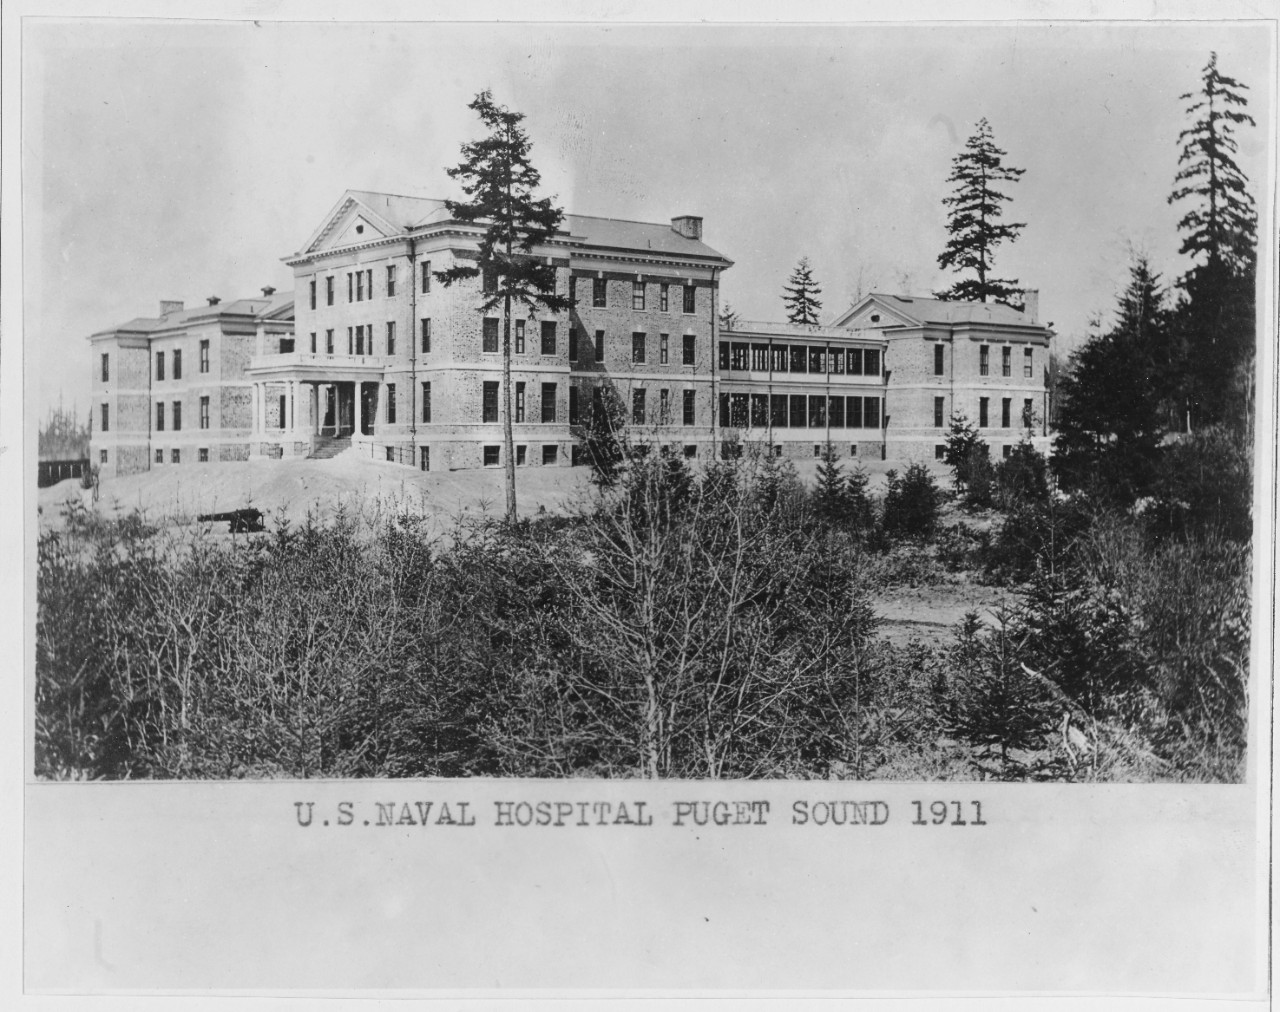 U.S. Naval Hospital, Puget Sound, Washington in 1911.